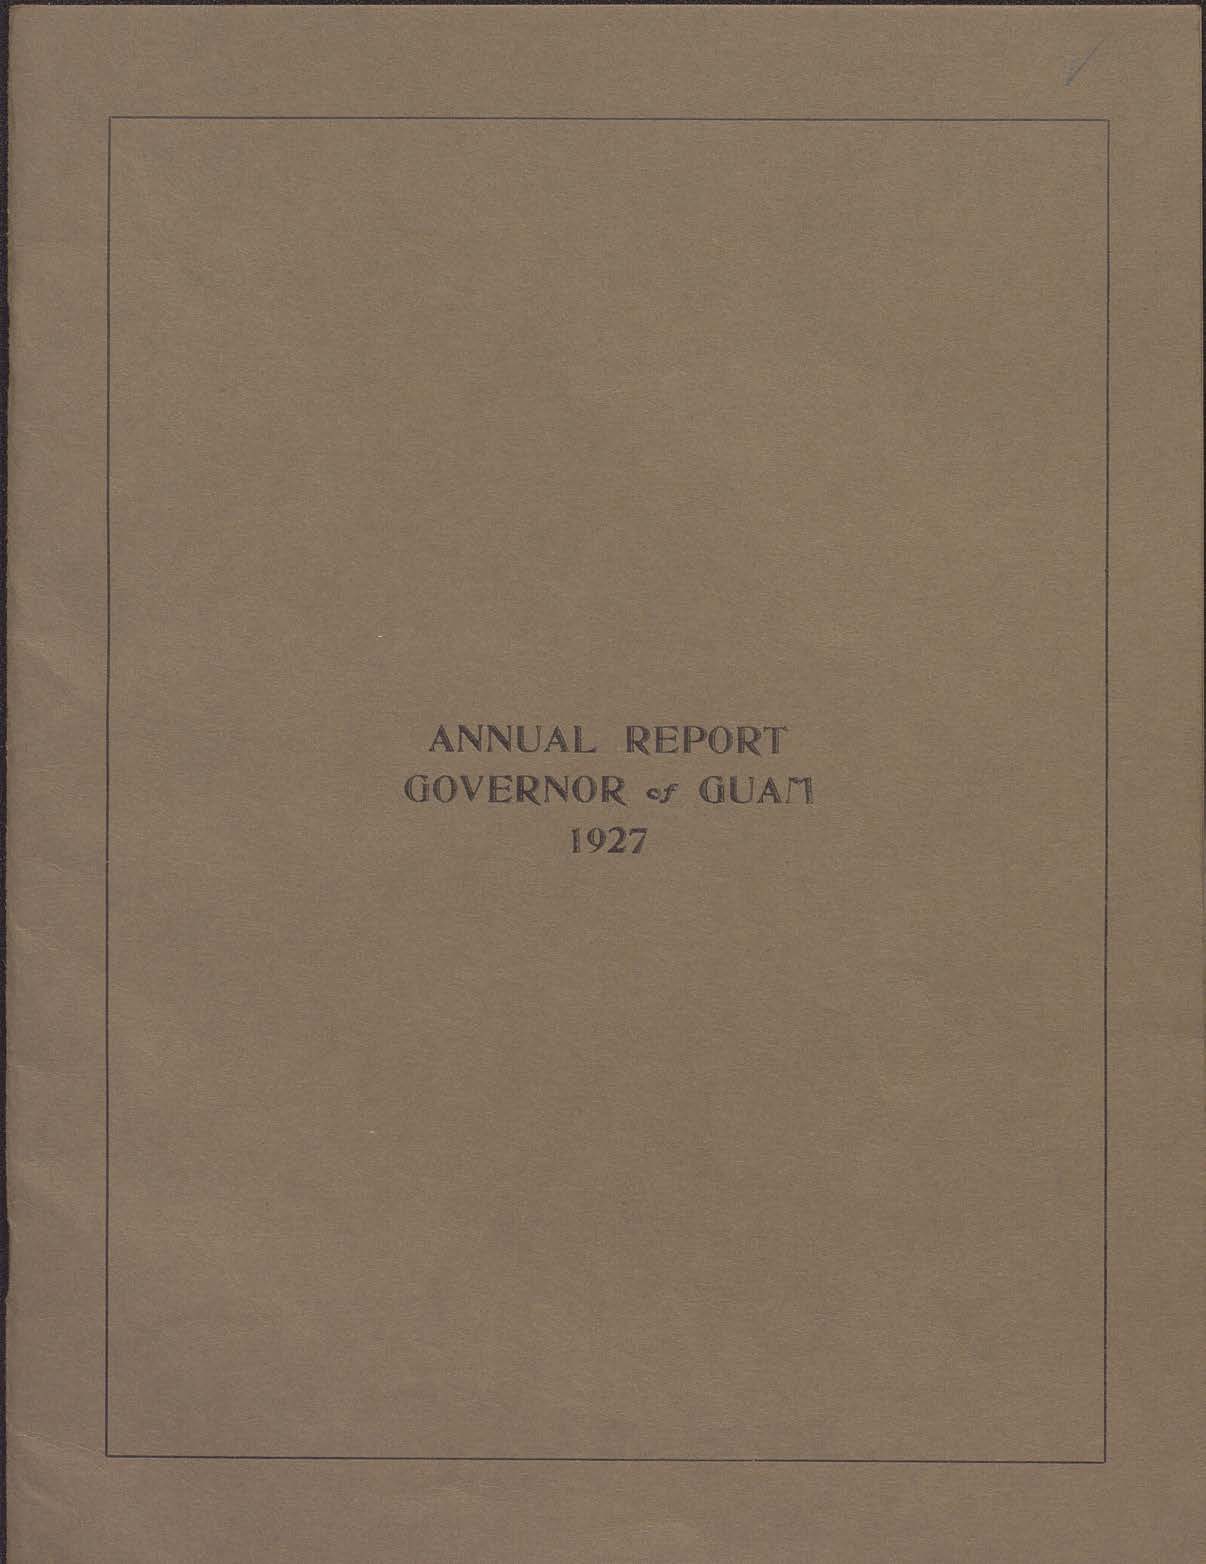 Annual Report - Governor of Guam